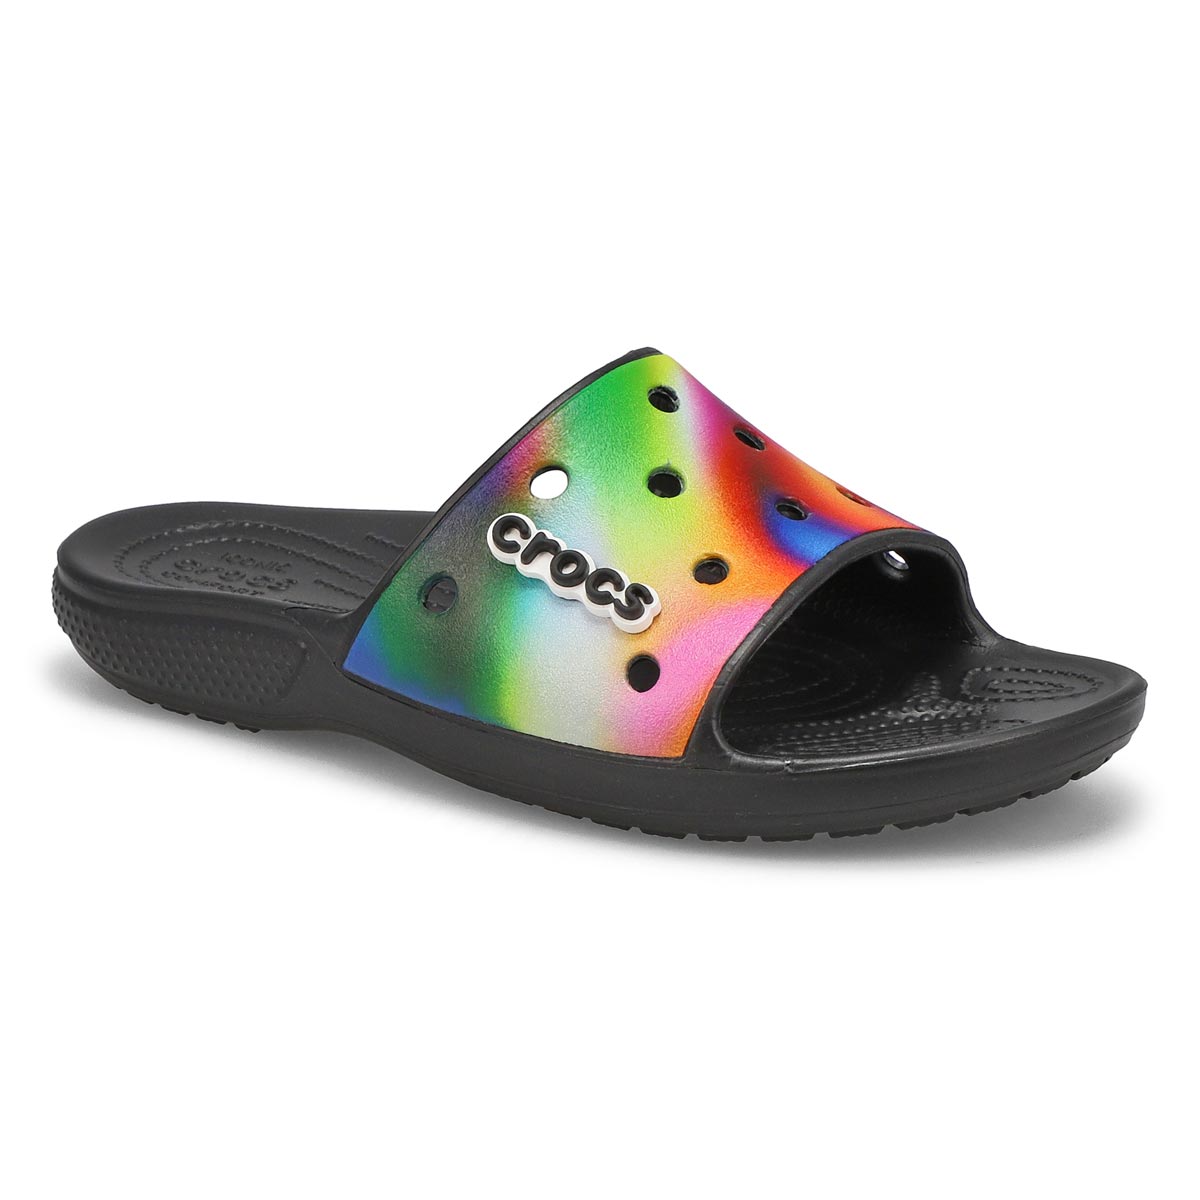 Crocs Women's Classic Solarized Slide - Black | SoftMoc.com